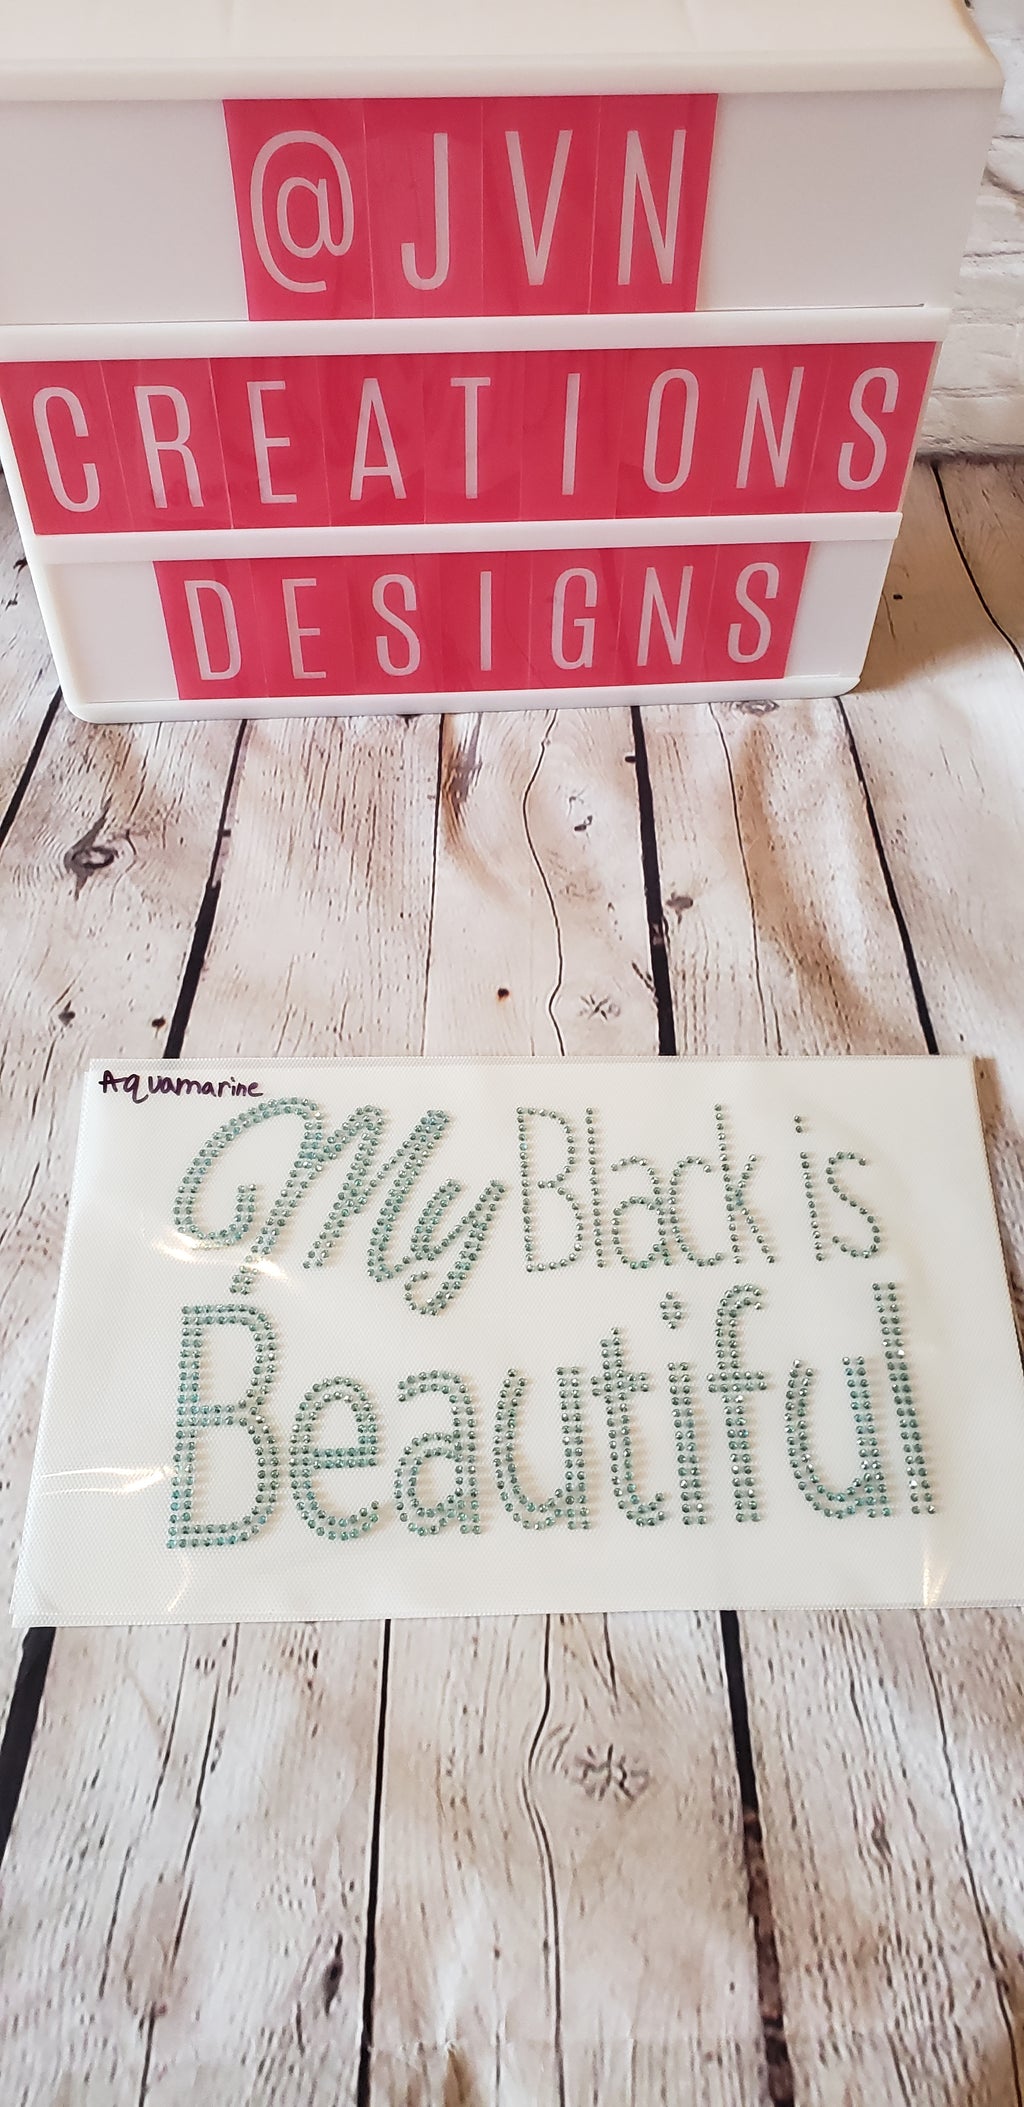 MY BLACK IS BEAUTIFUL RHINESTONE TRANSFER SHEET - JVN Creations & Designs